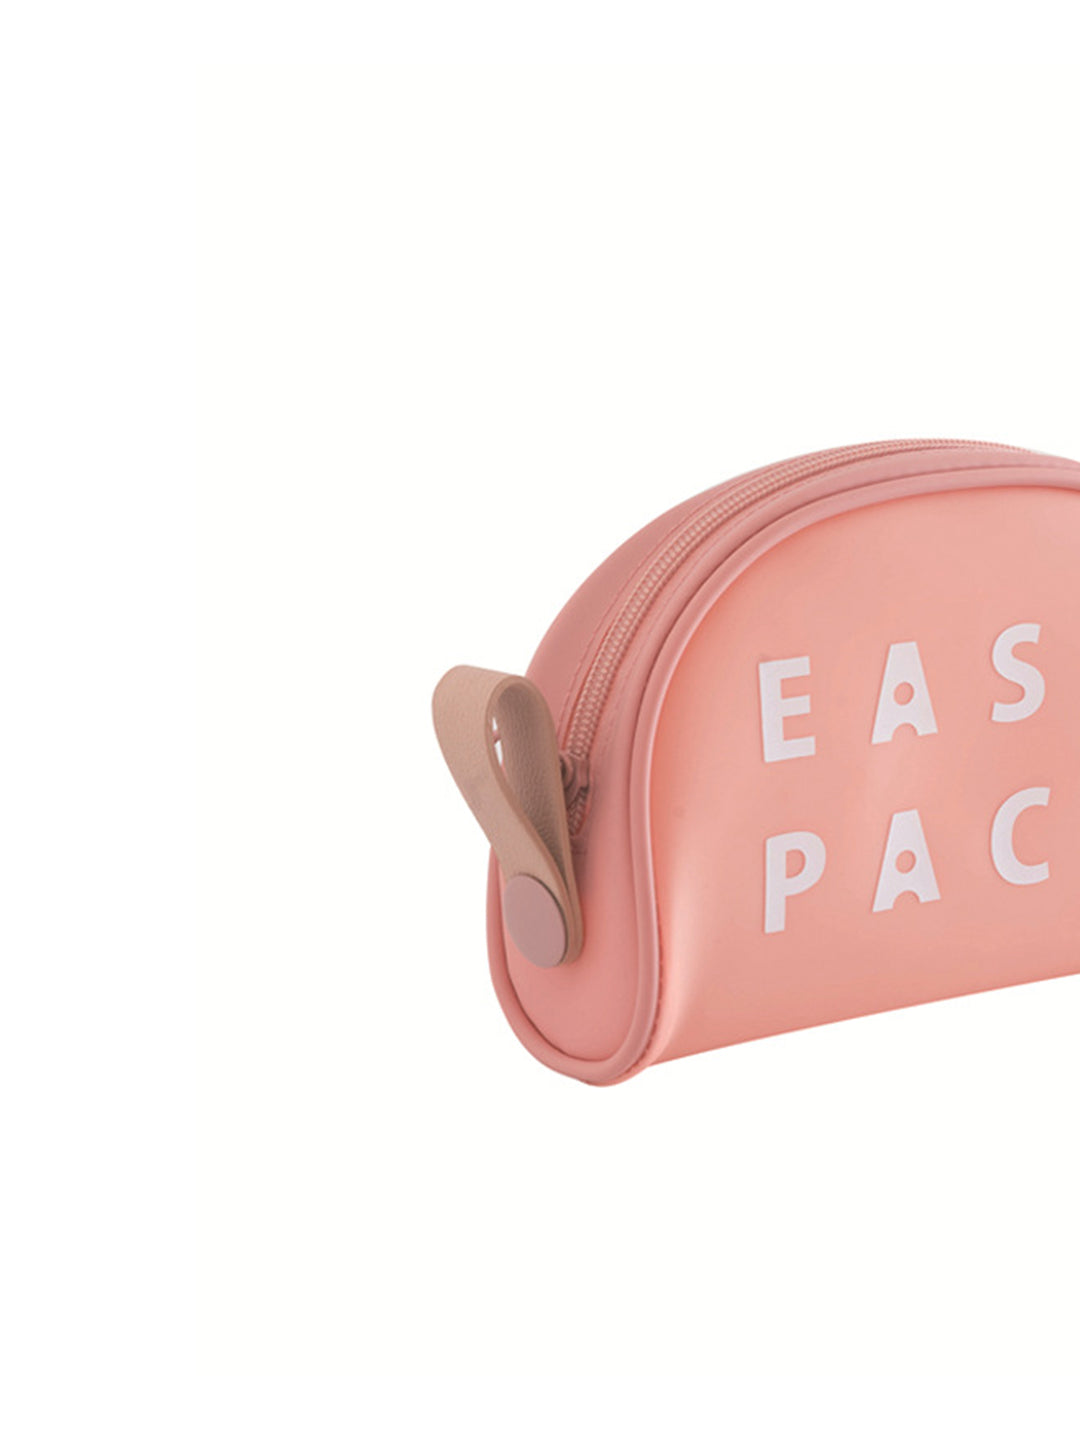 VON CASA D Shaped Plastic Travel Pouch - Peach